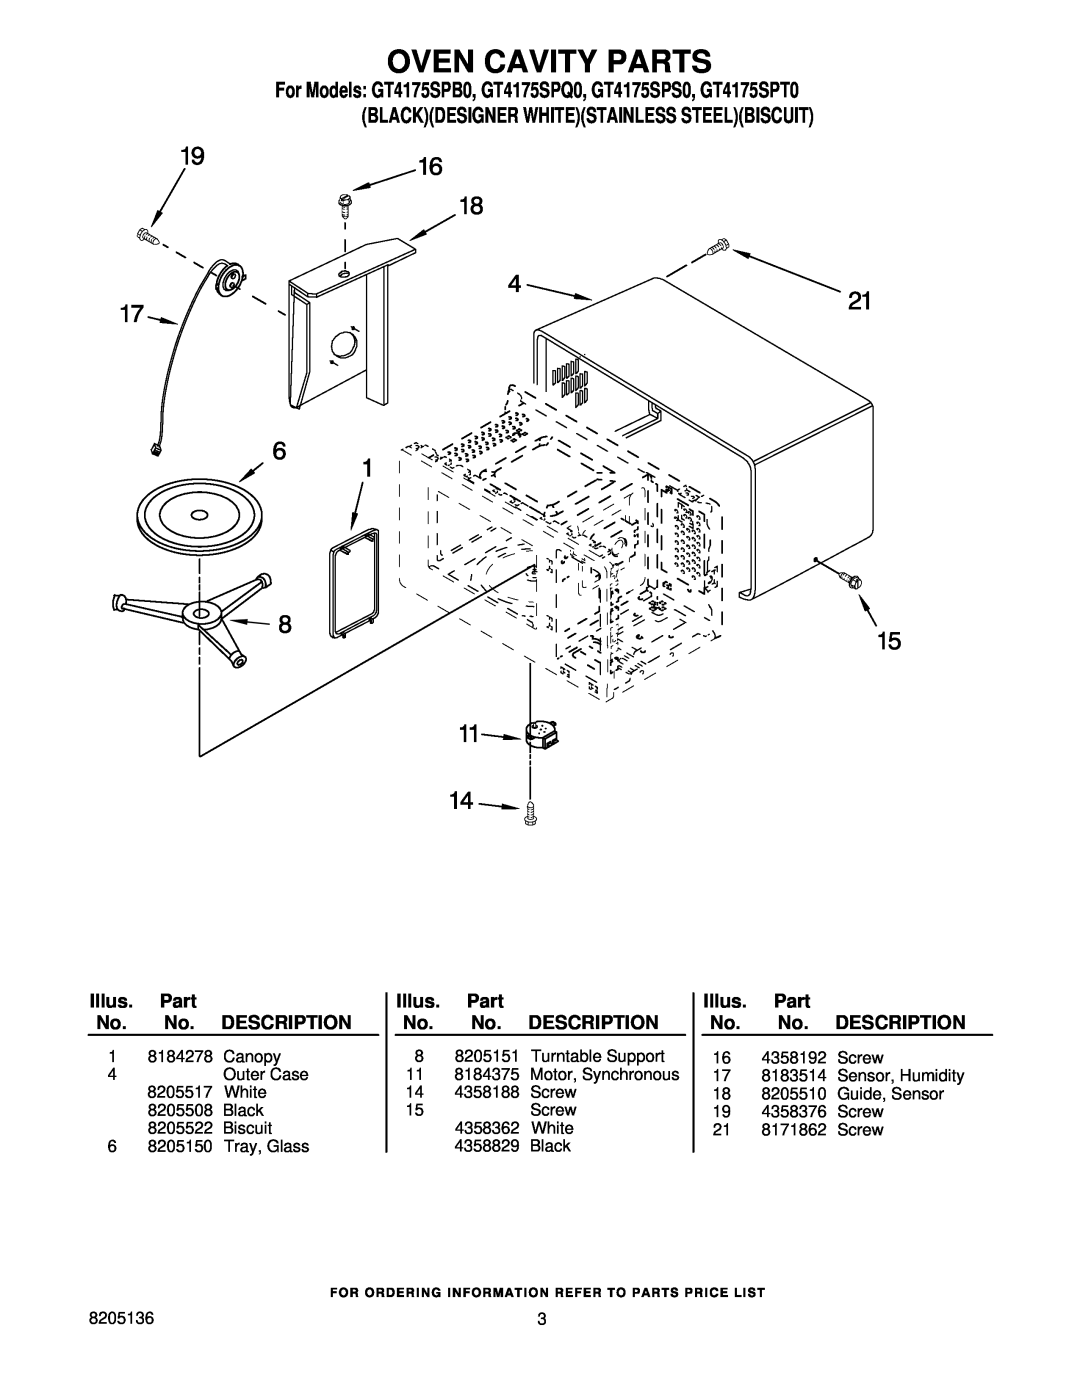 Whirlpool GT4175SPT0, GT4175SPB0 manual Oven Cavity Parts, Illus, Description, Blackdesigner Whitestainless Steelbiscuit 